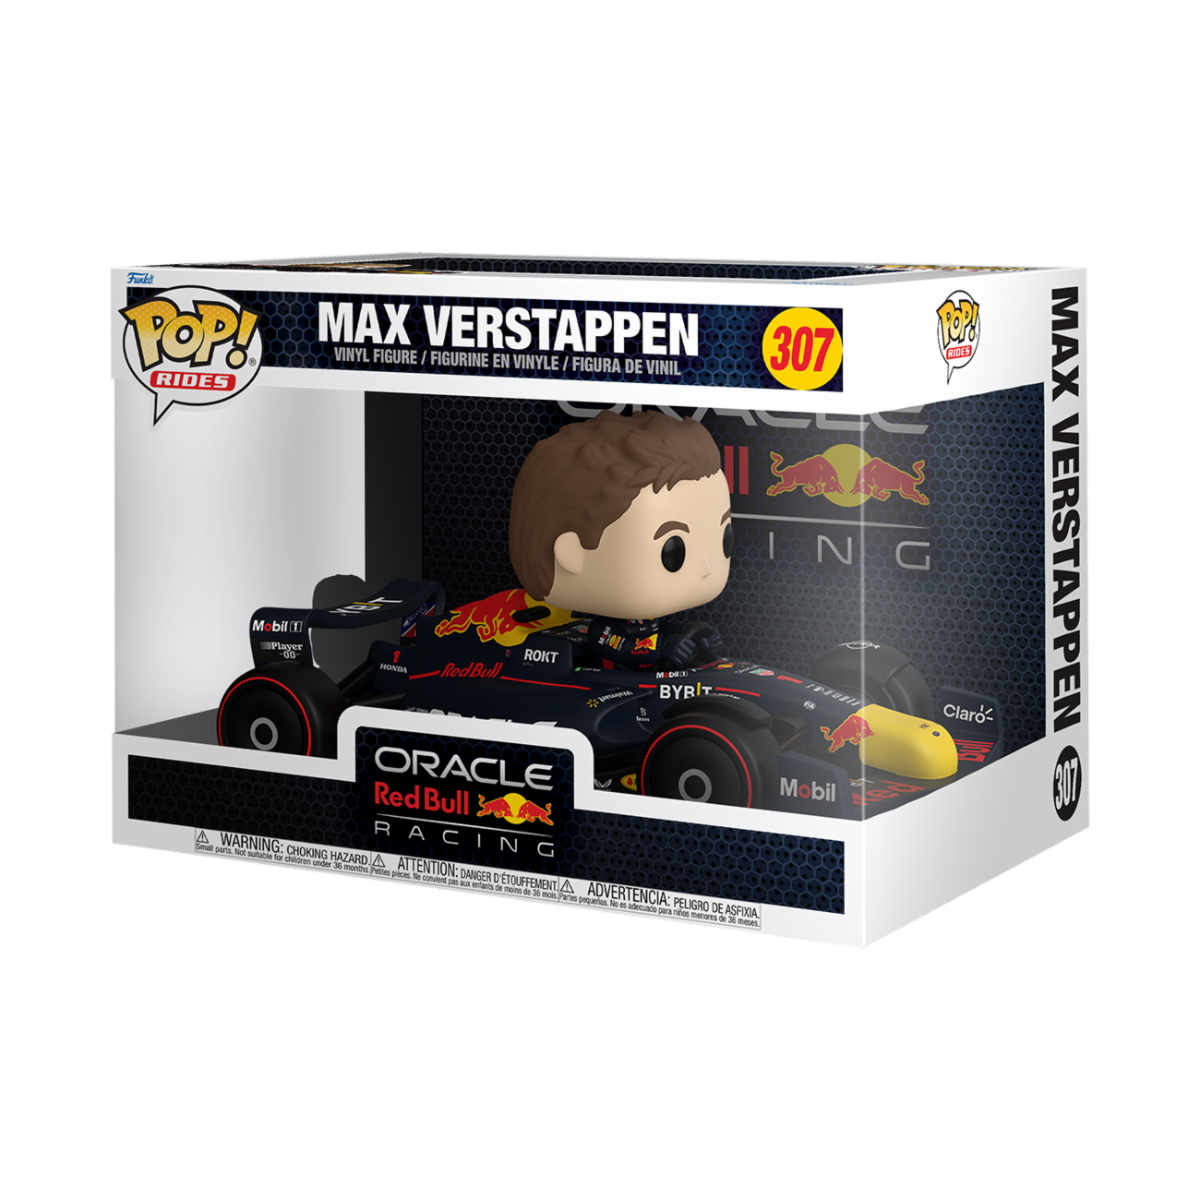 Max Verstappen Funko Pop Ride 307.